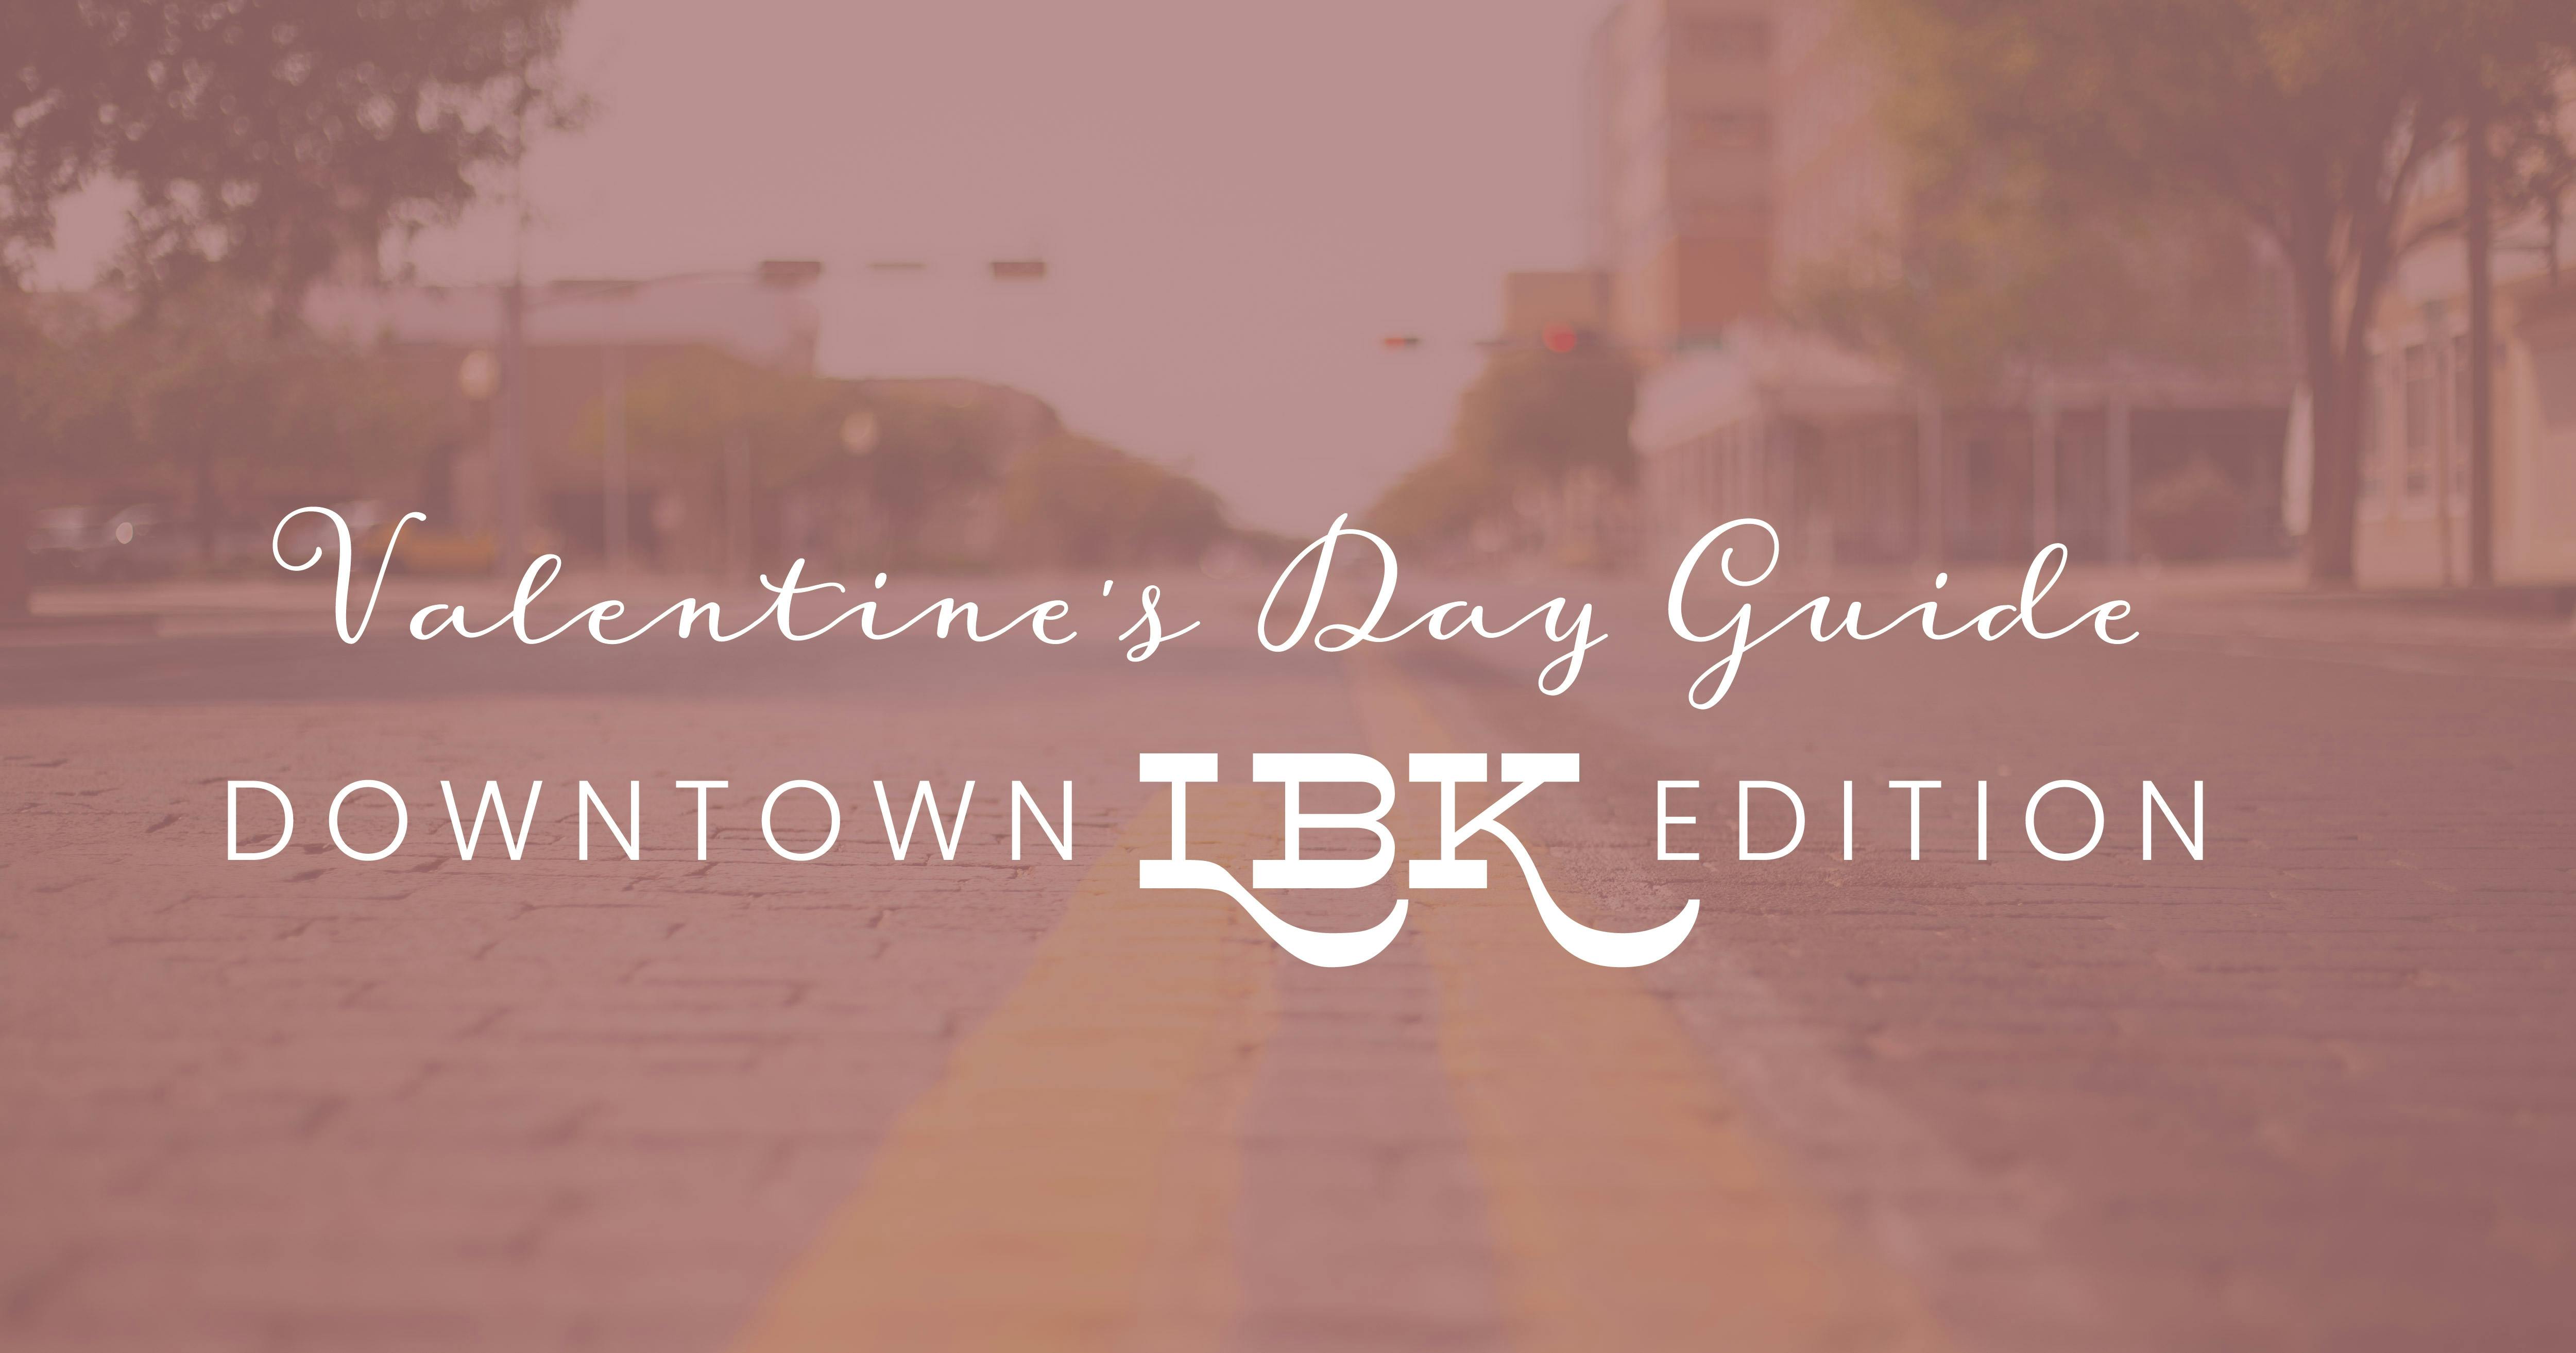 Valentine’s Day 2022: Downtown LBK Edition image